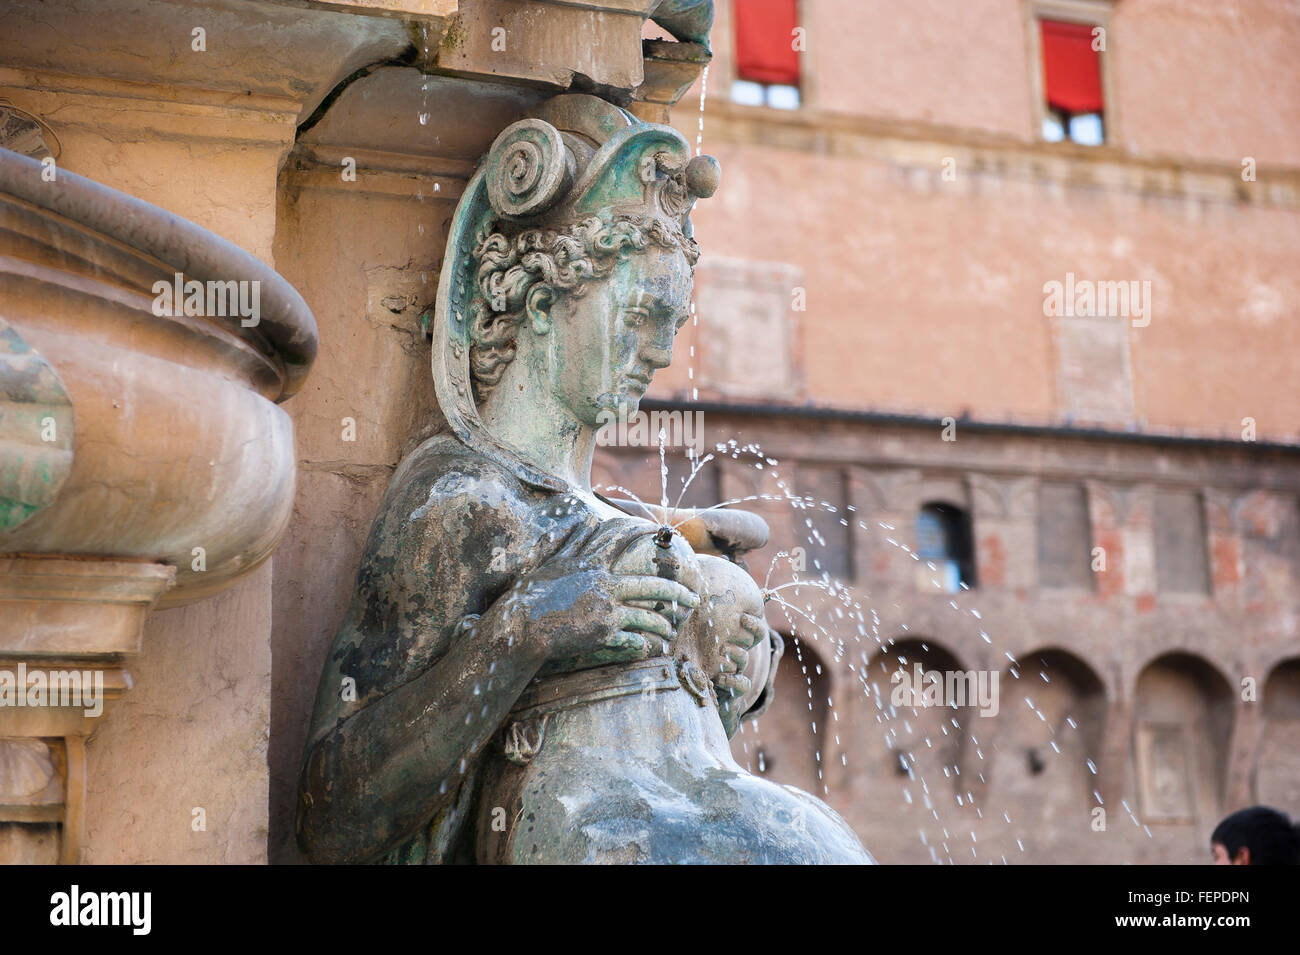 Bologna-Neptun-Brunnen, Bronzestatue von eine stillende Nereide am Fuße des Neptun-Brunnen (Fontana del Nettuno) in Piazza Nettuno, Bologna. Stockfoto